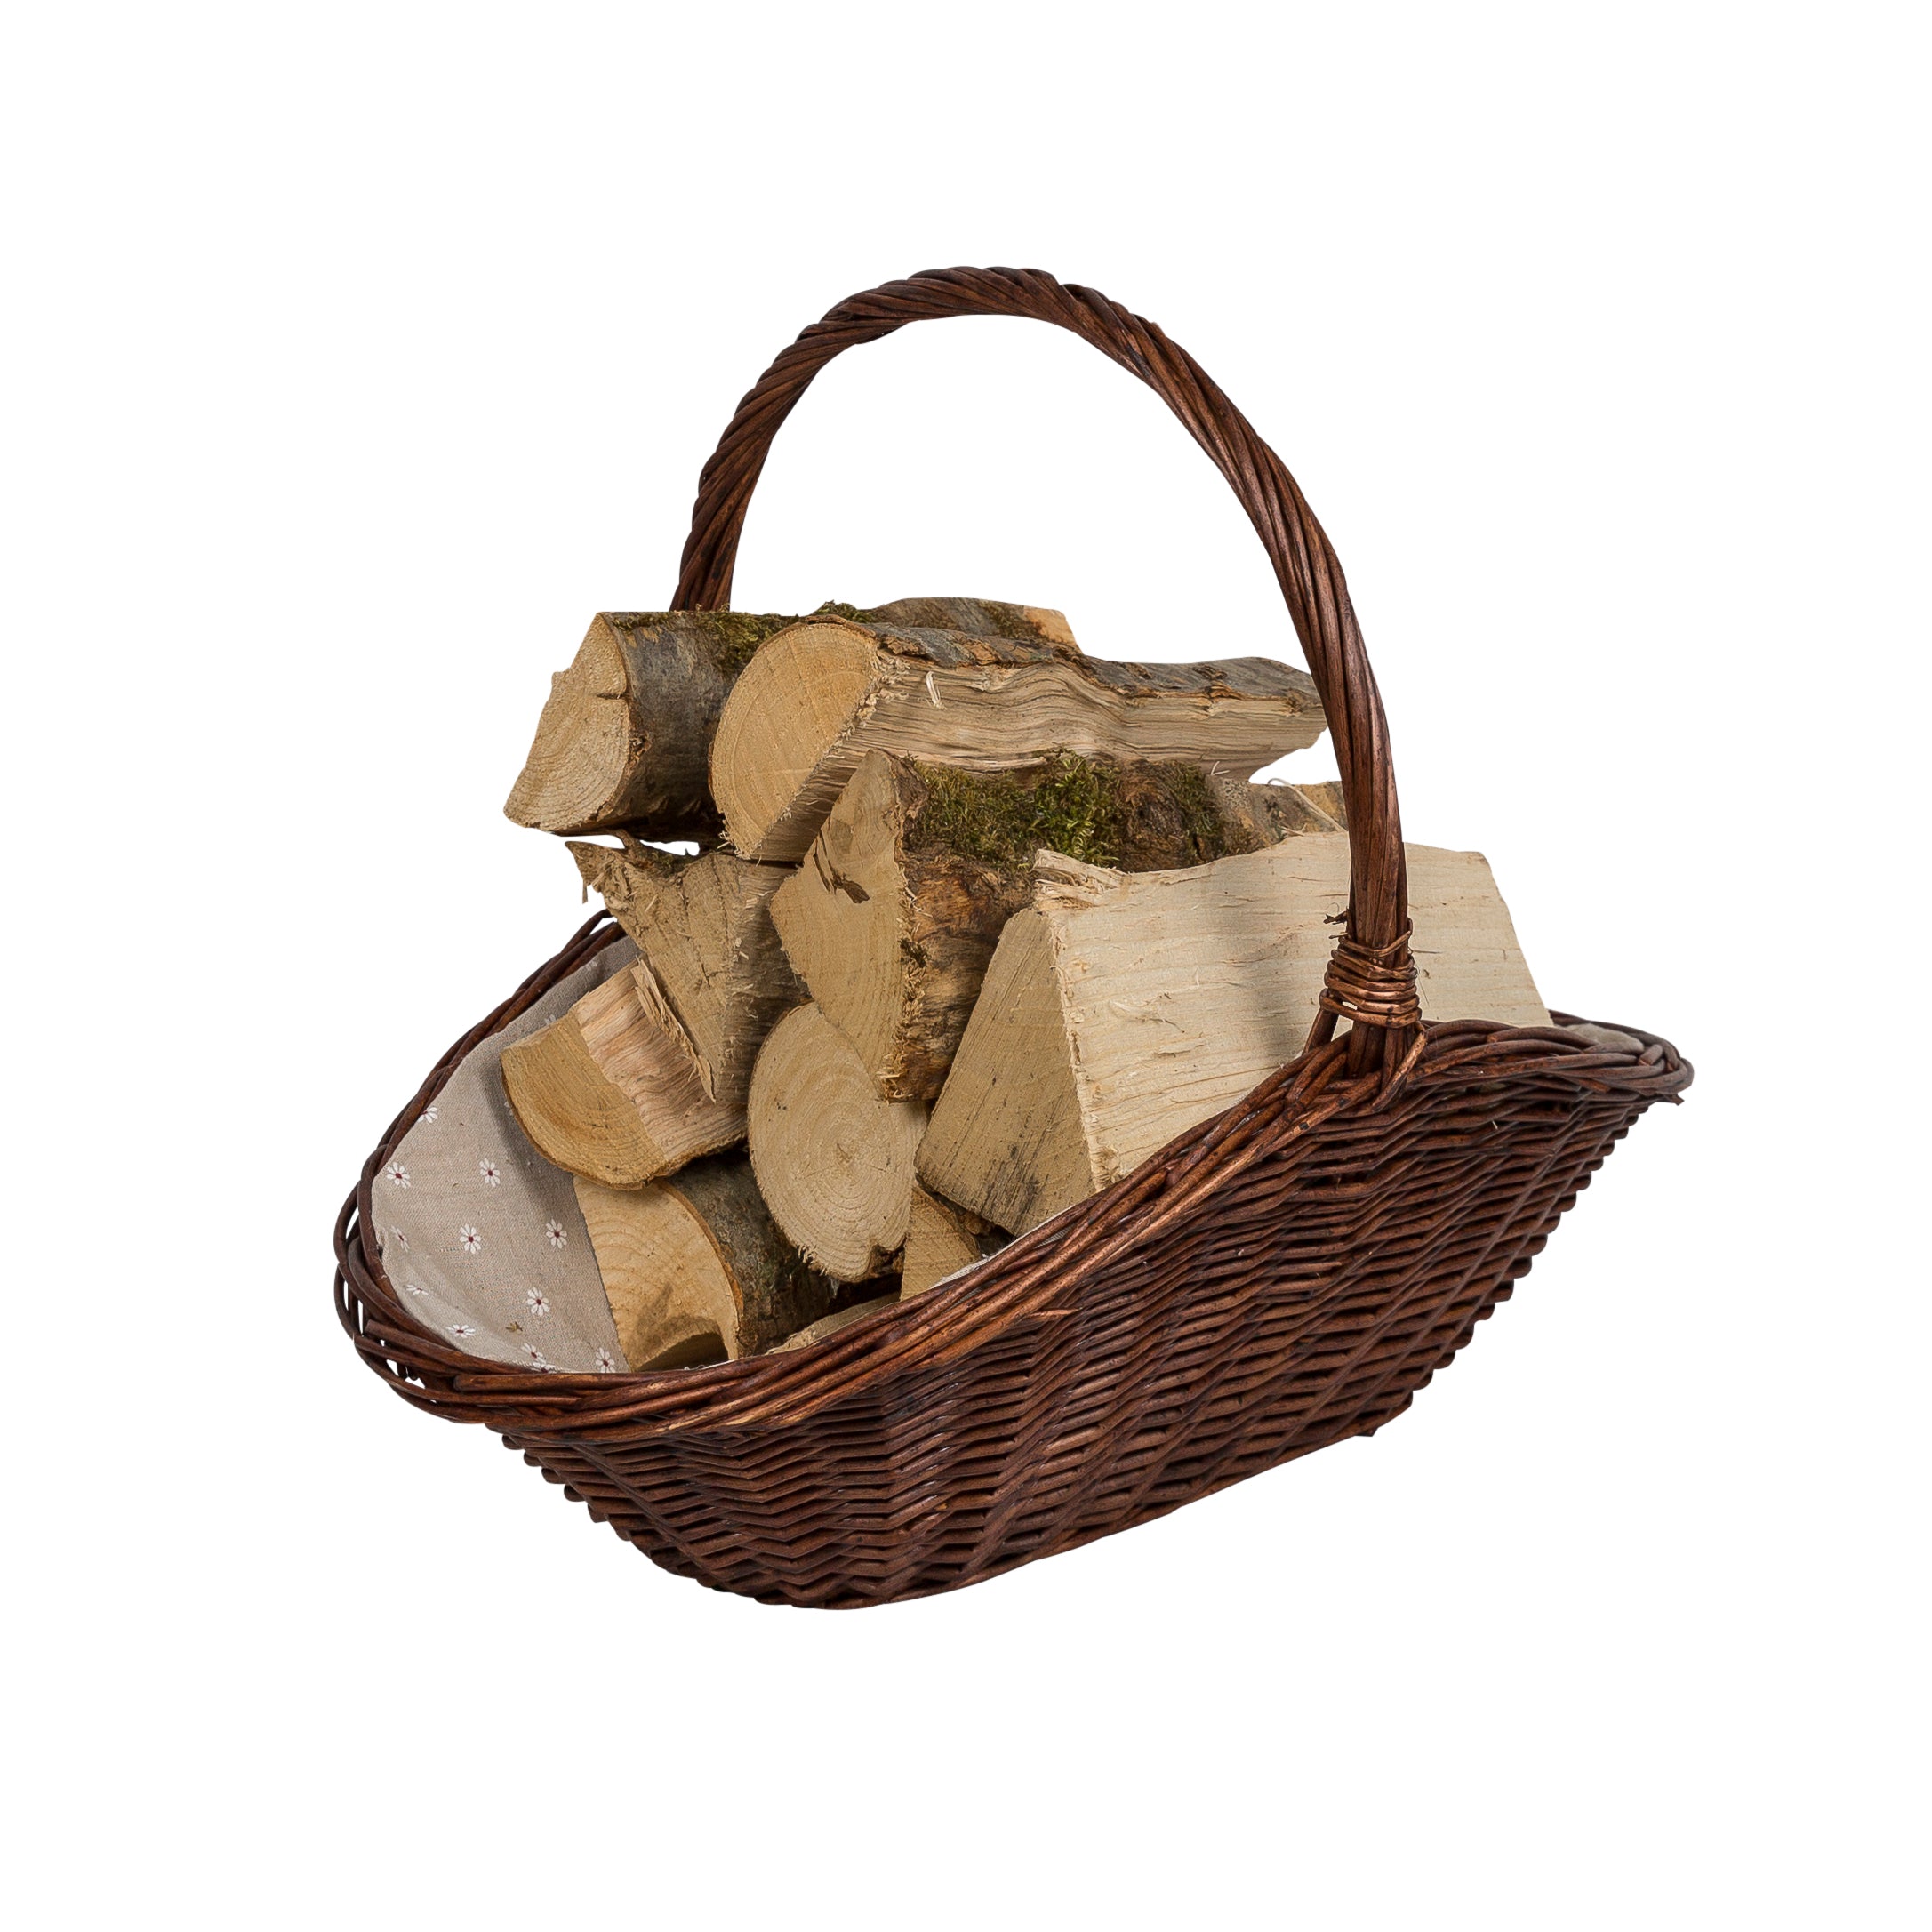 Image of Wicker basket holding firewood